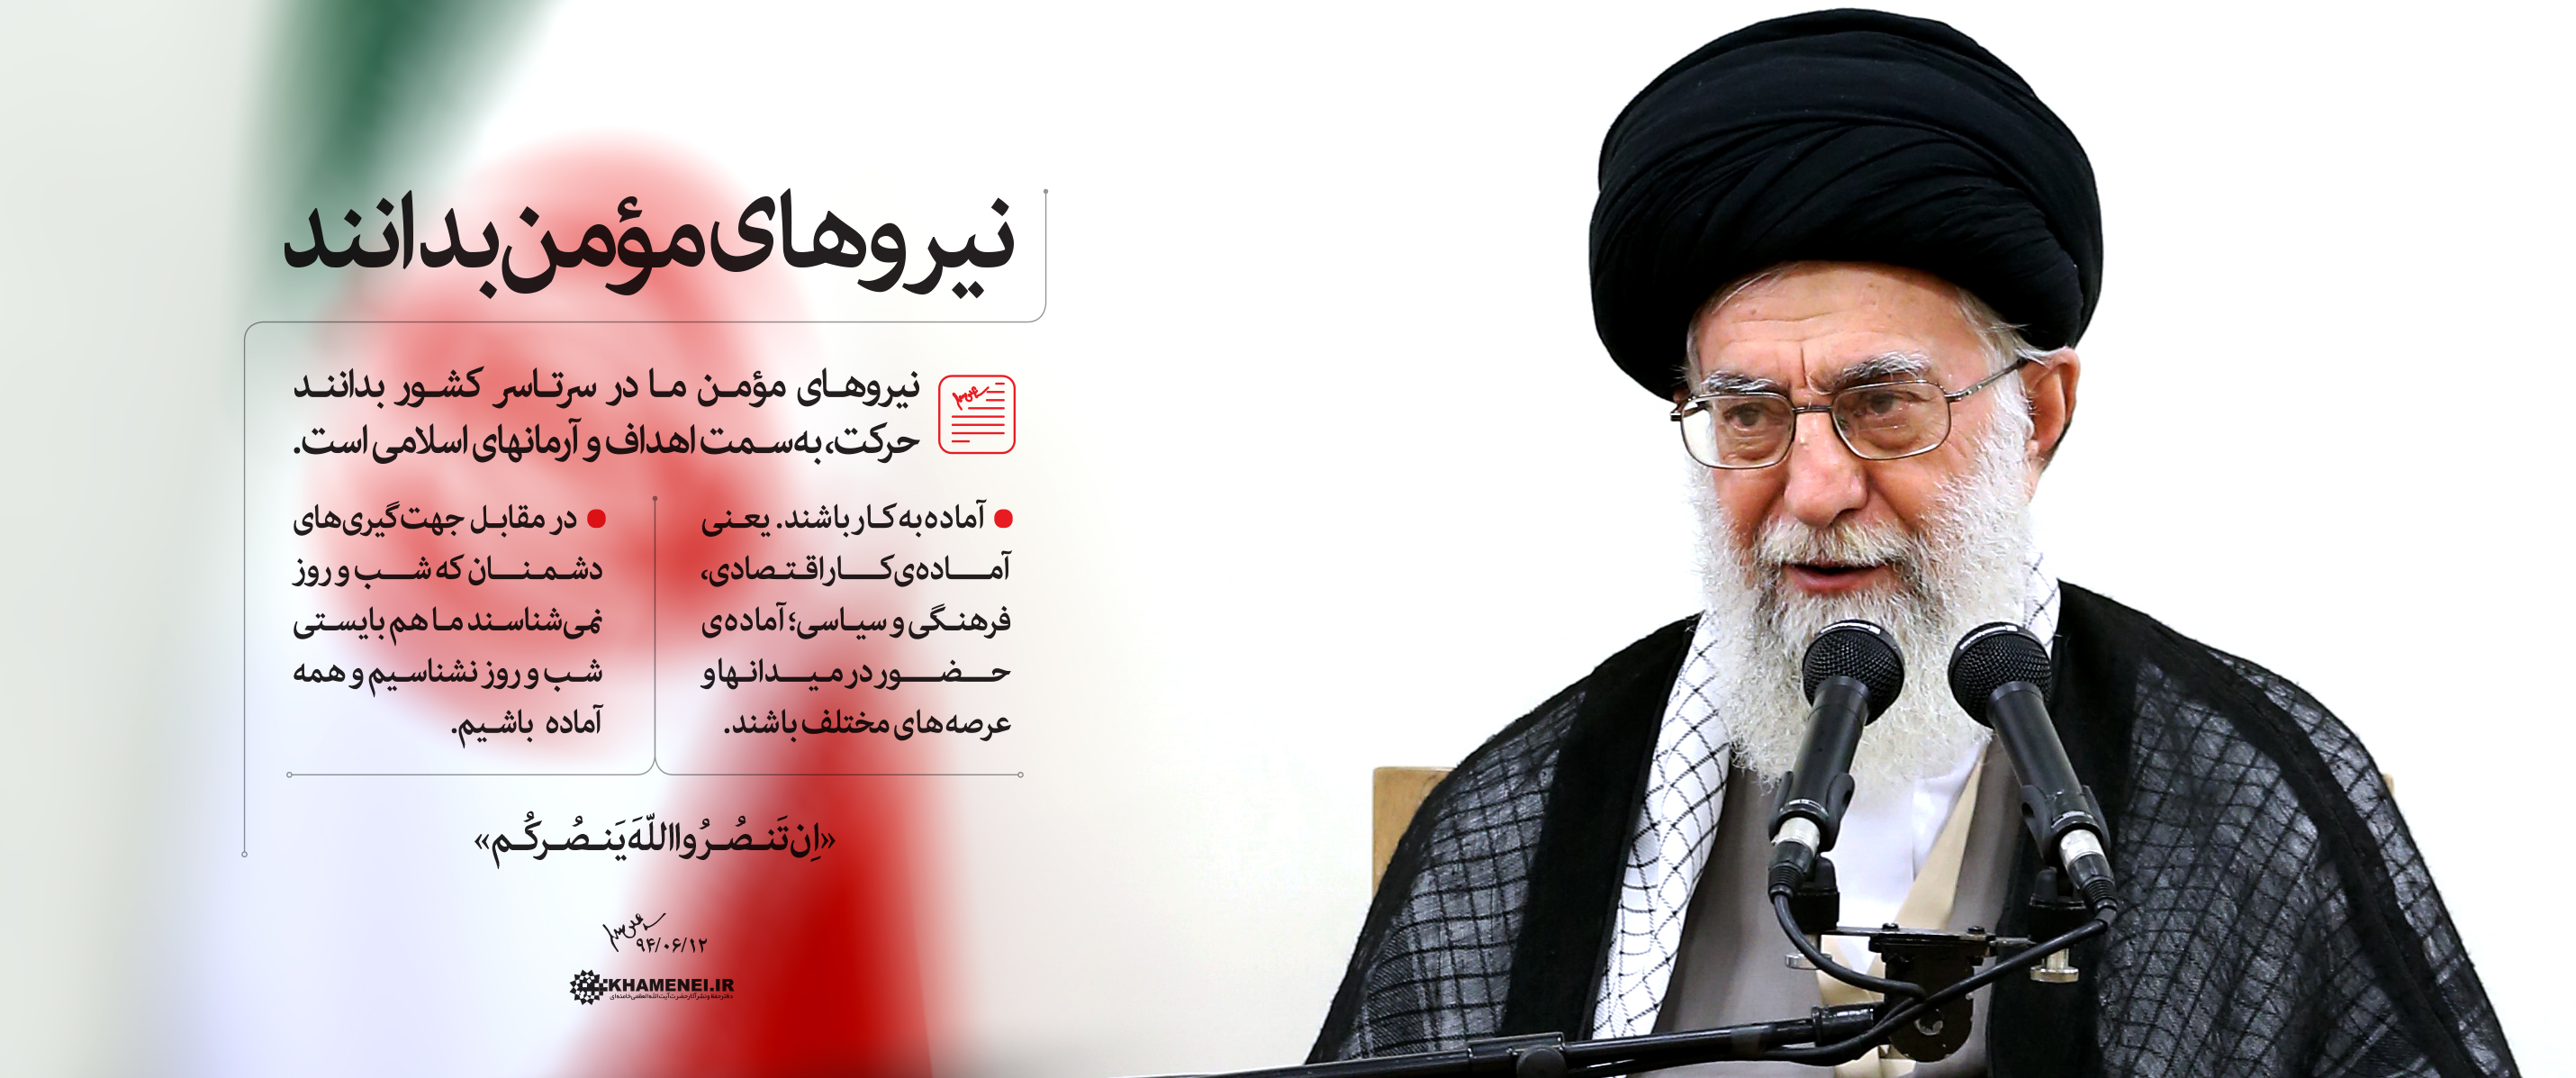 http://farsi.khamenei.ir/ndata/news/30699/B/13940617_0130699.jpg